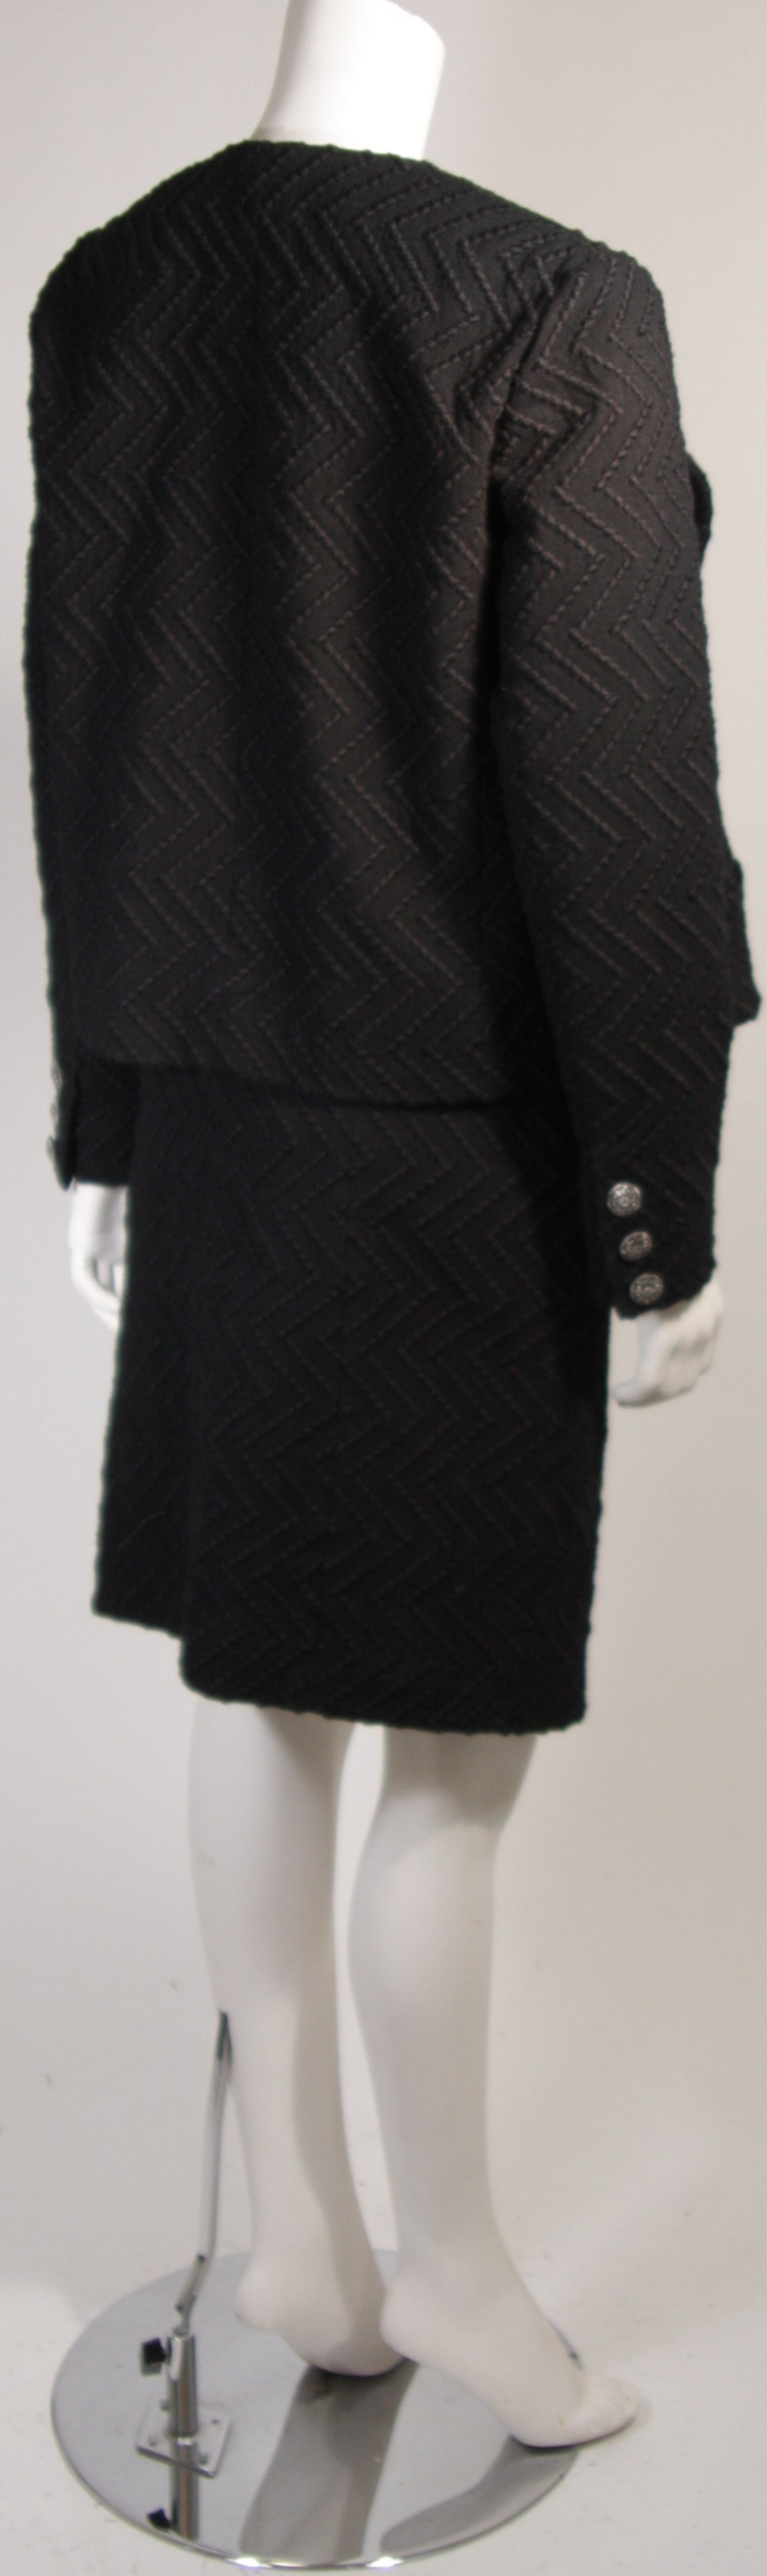 Chanel Black Boucle Suit with Drape Style Jacket Size 42 2